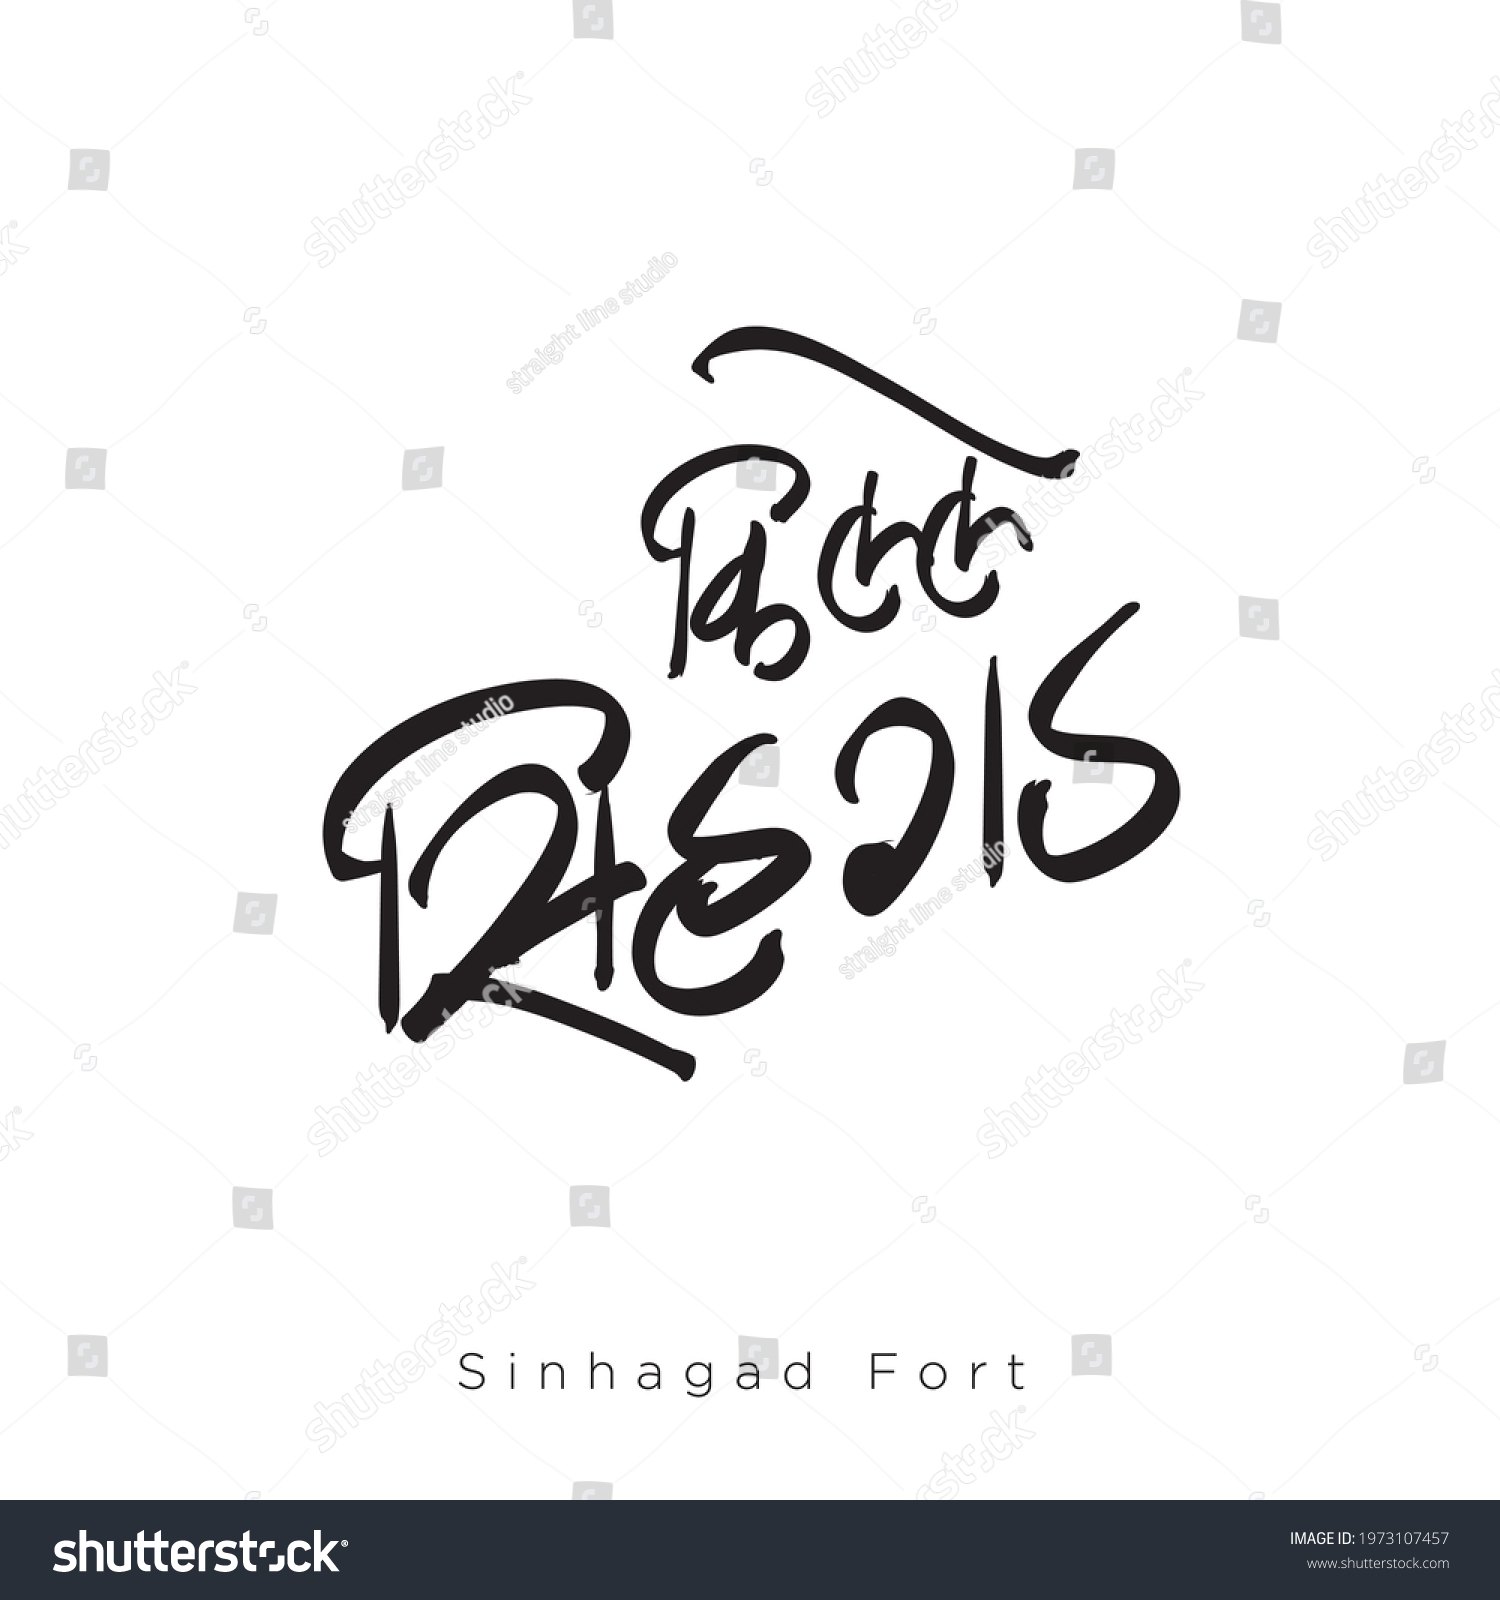 SVG of India Maharashtra fort name of Sinhagad fort for vector handwritten Devanagari calligraphy. svg